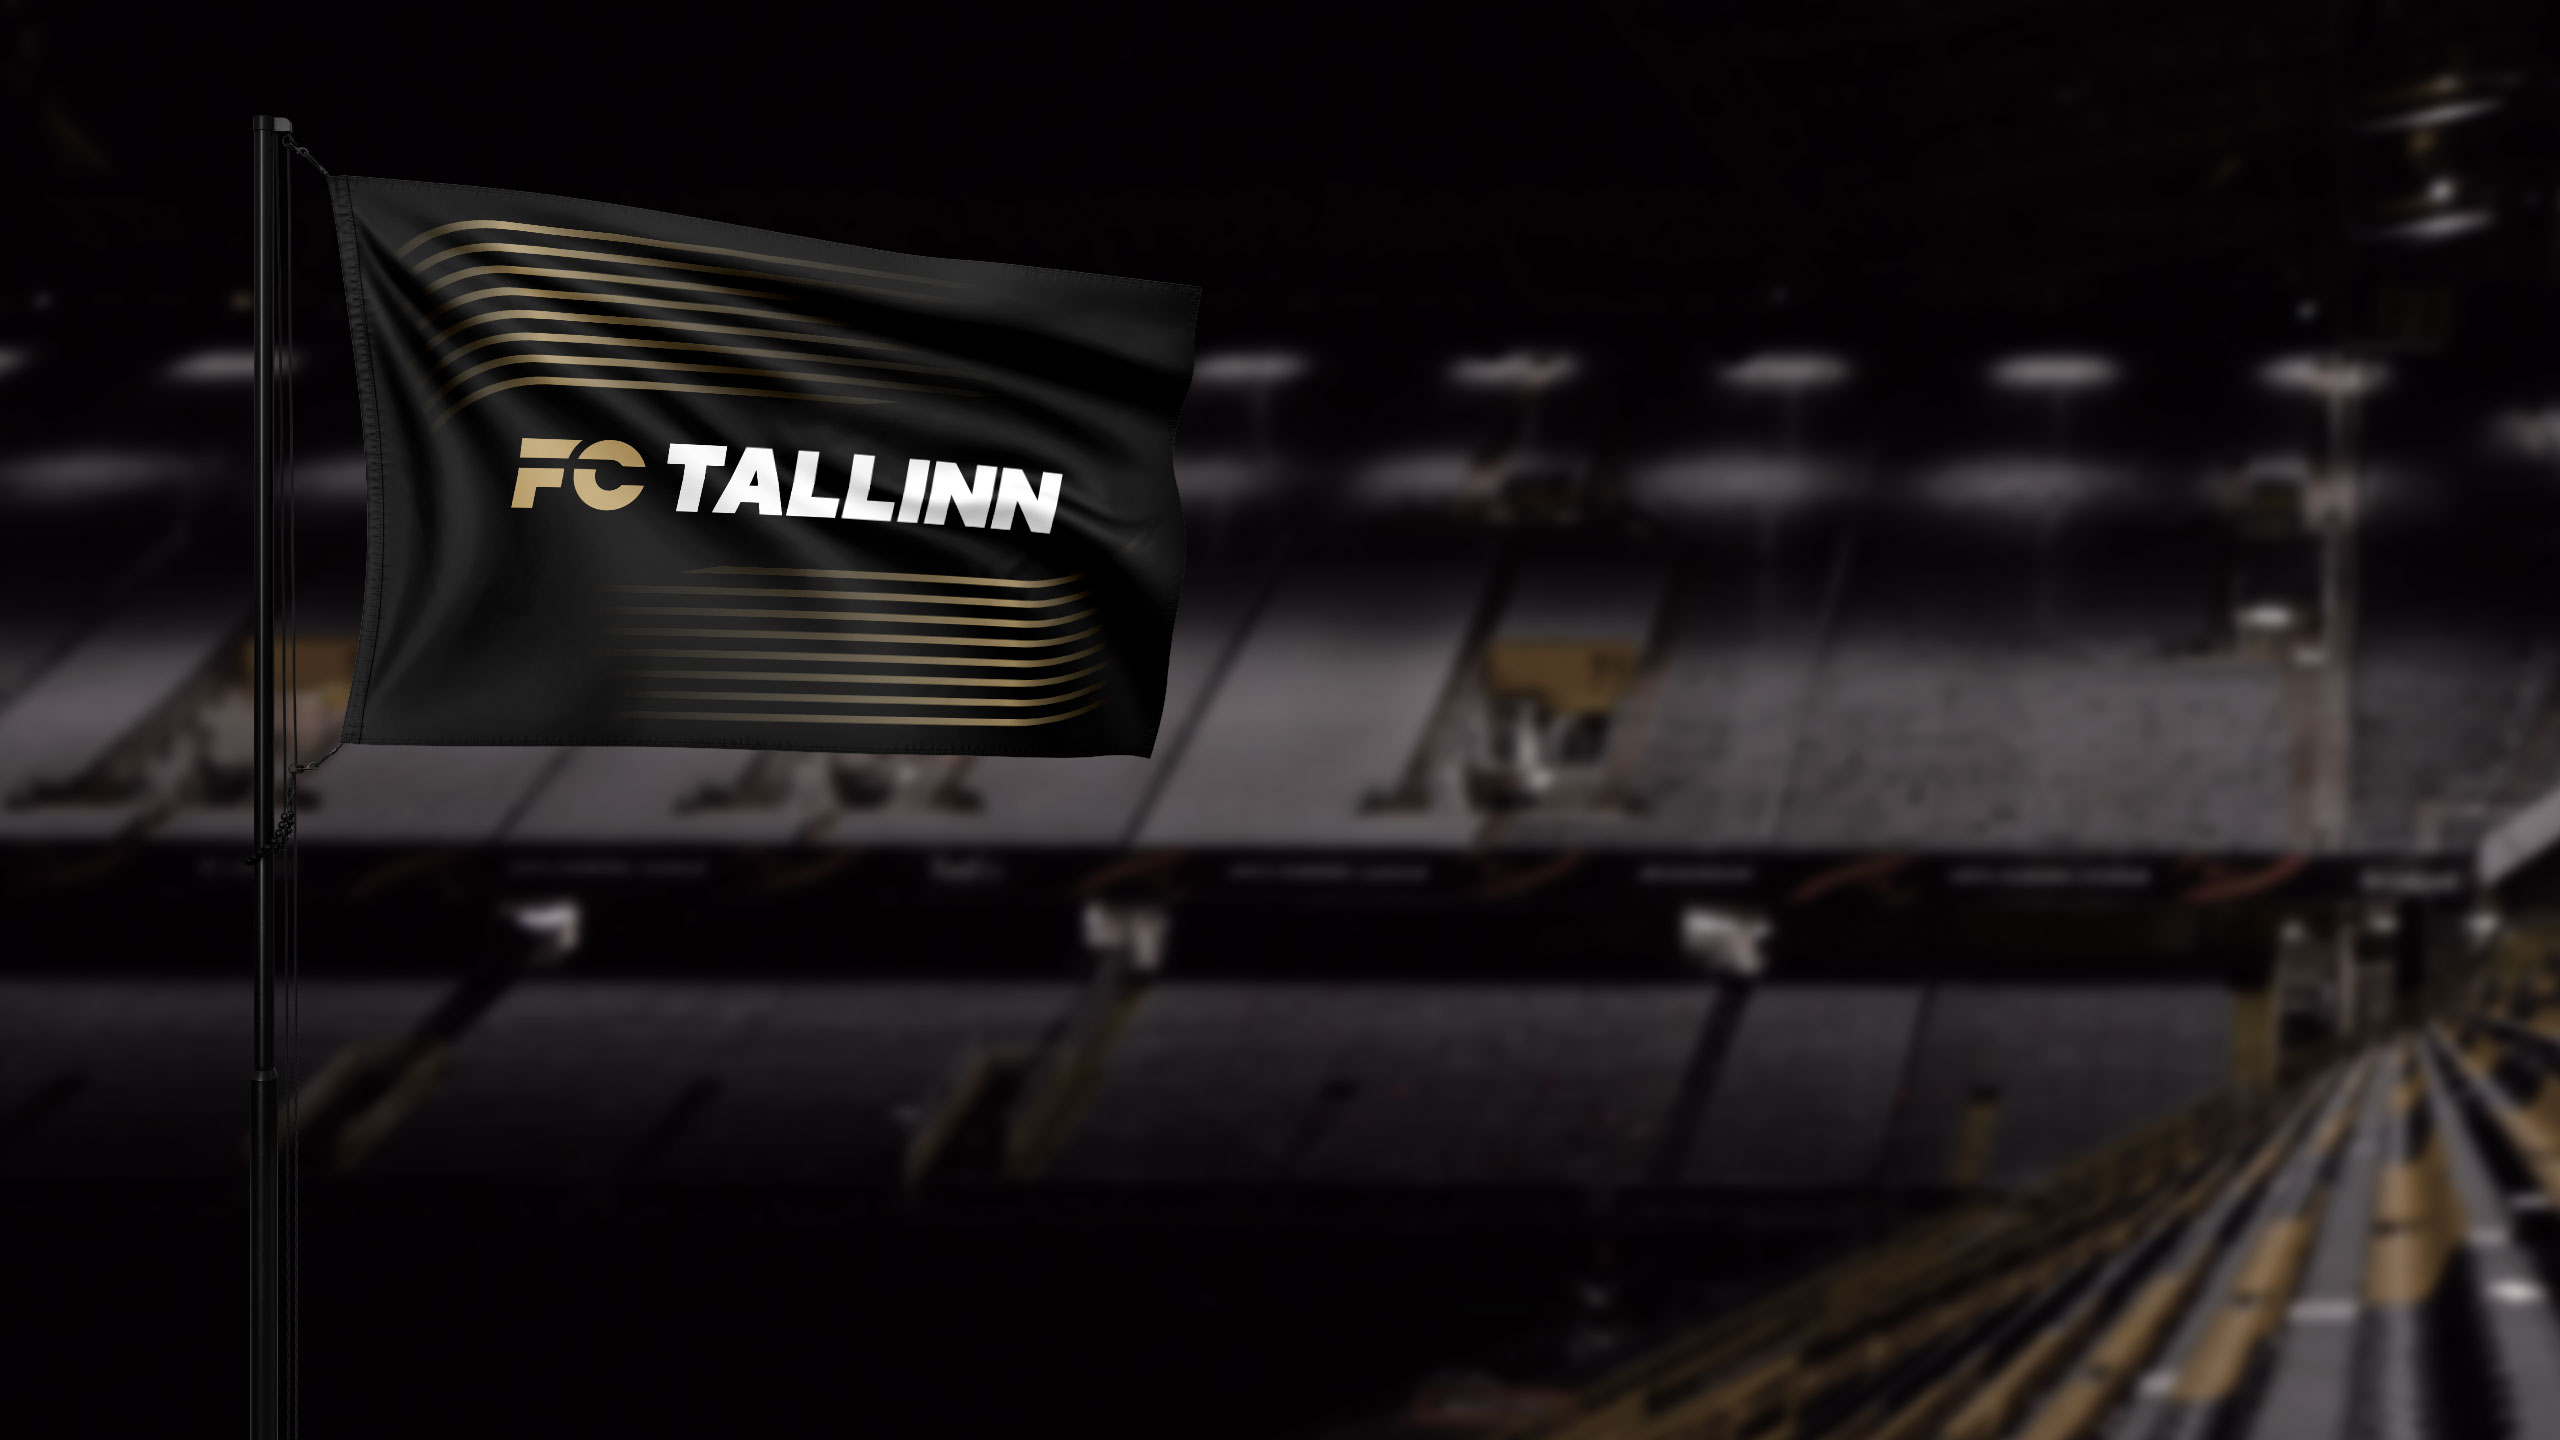 New visual identity for the Tallinn football club